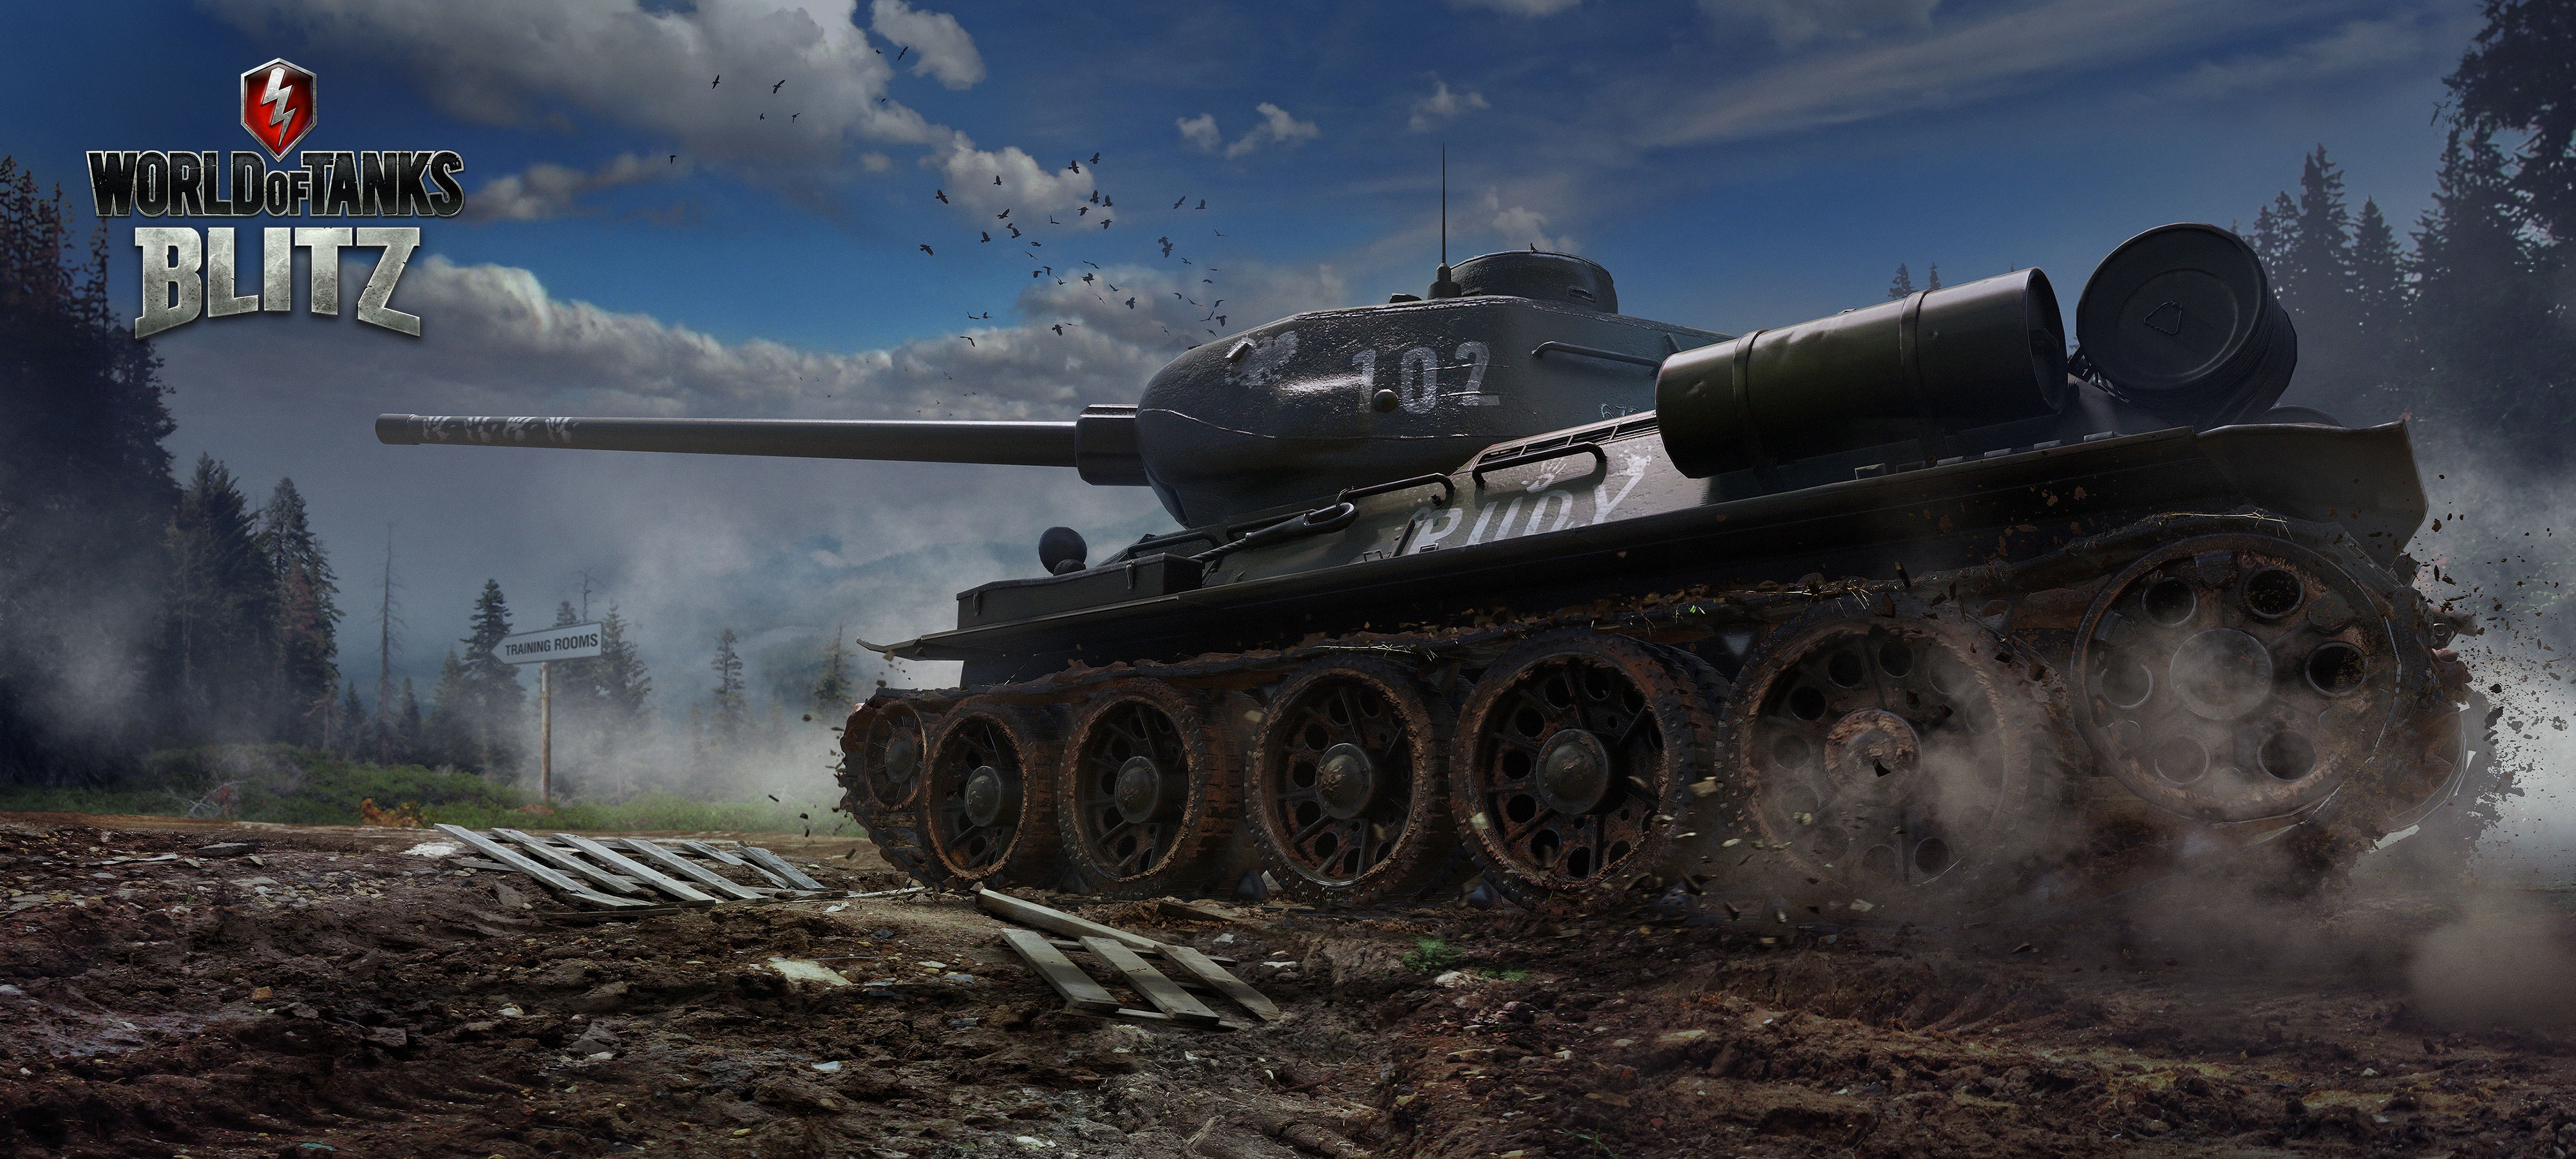 world of tanks blitz release date